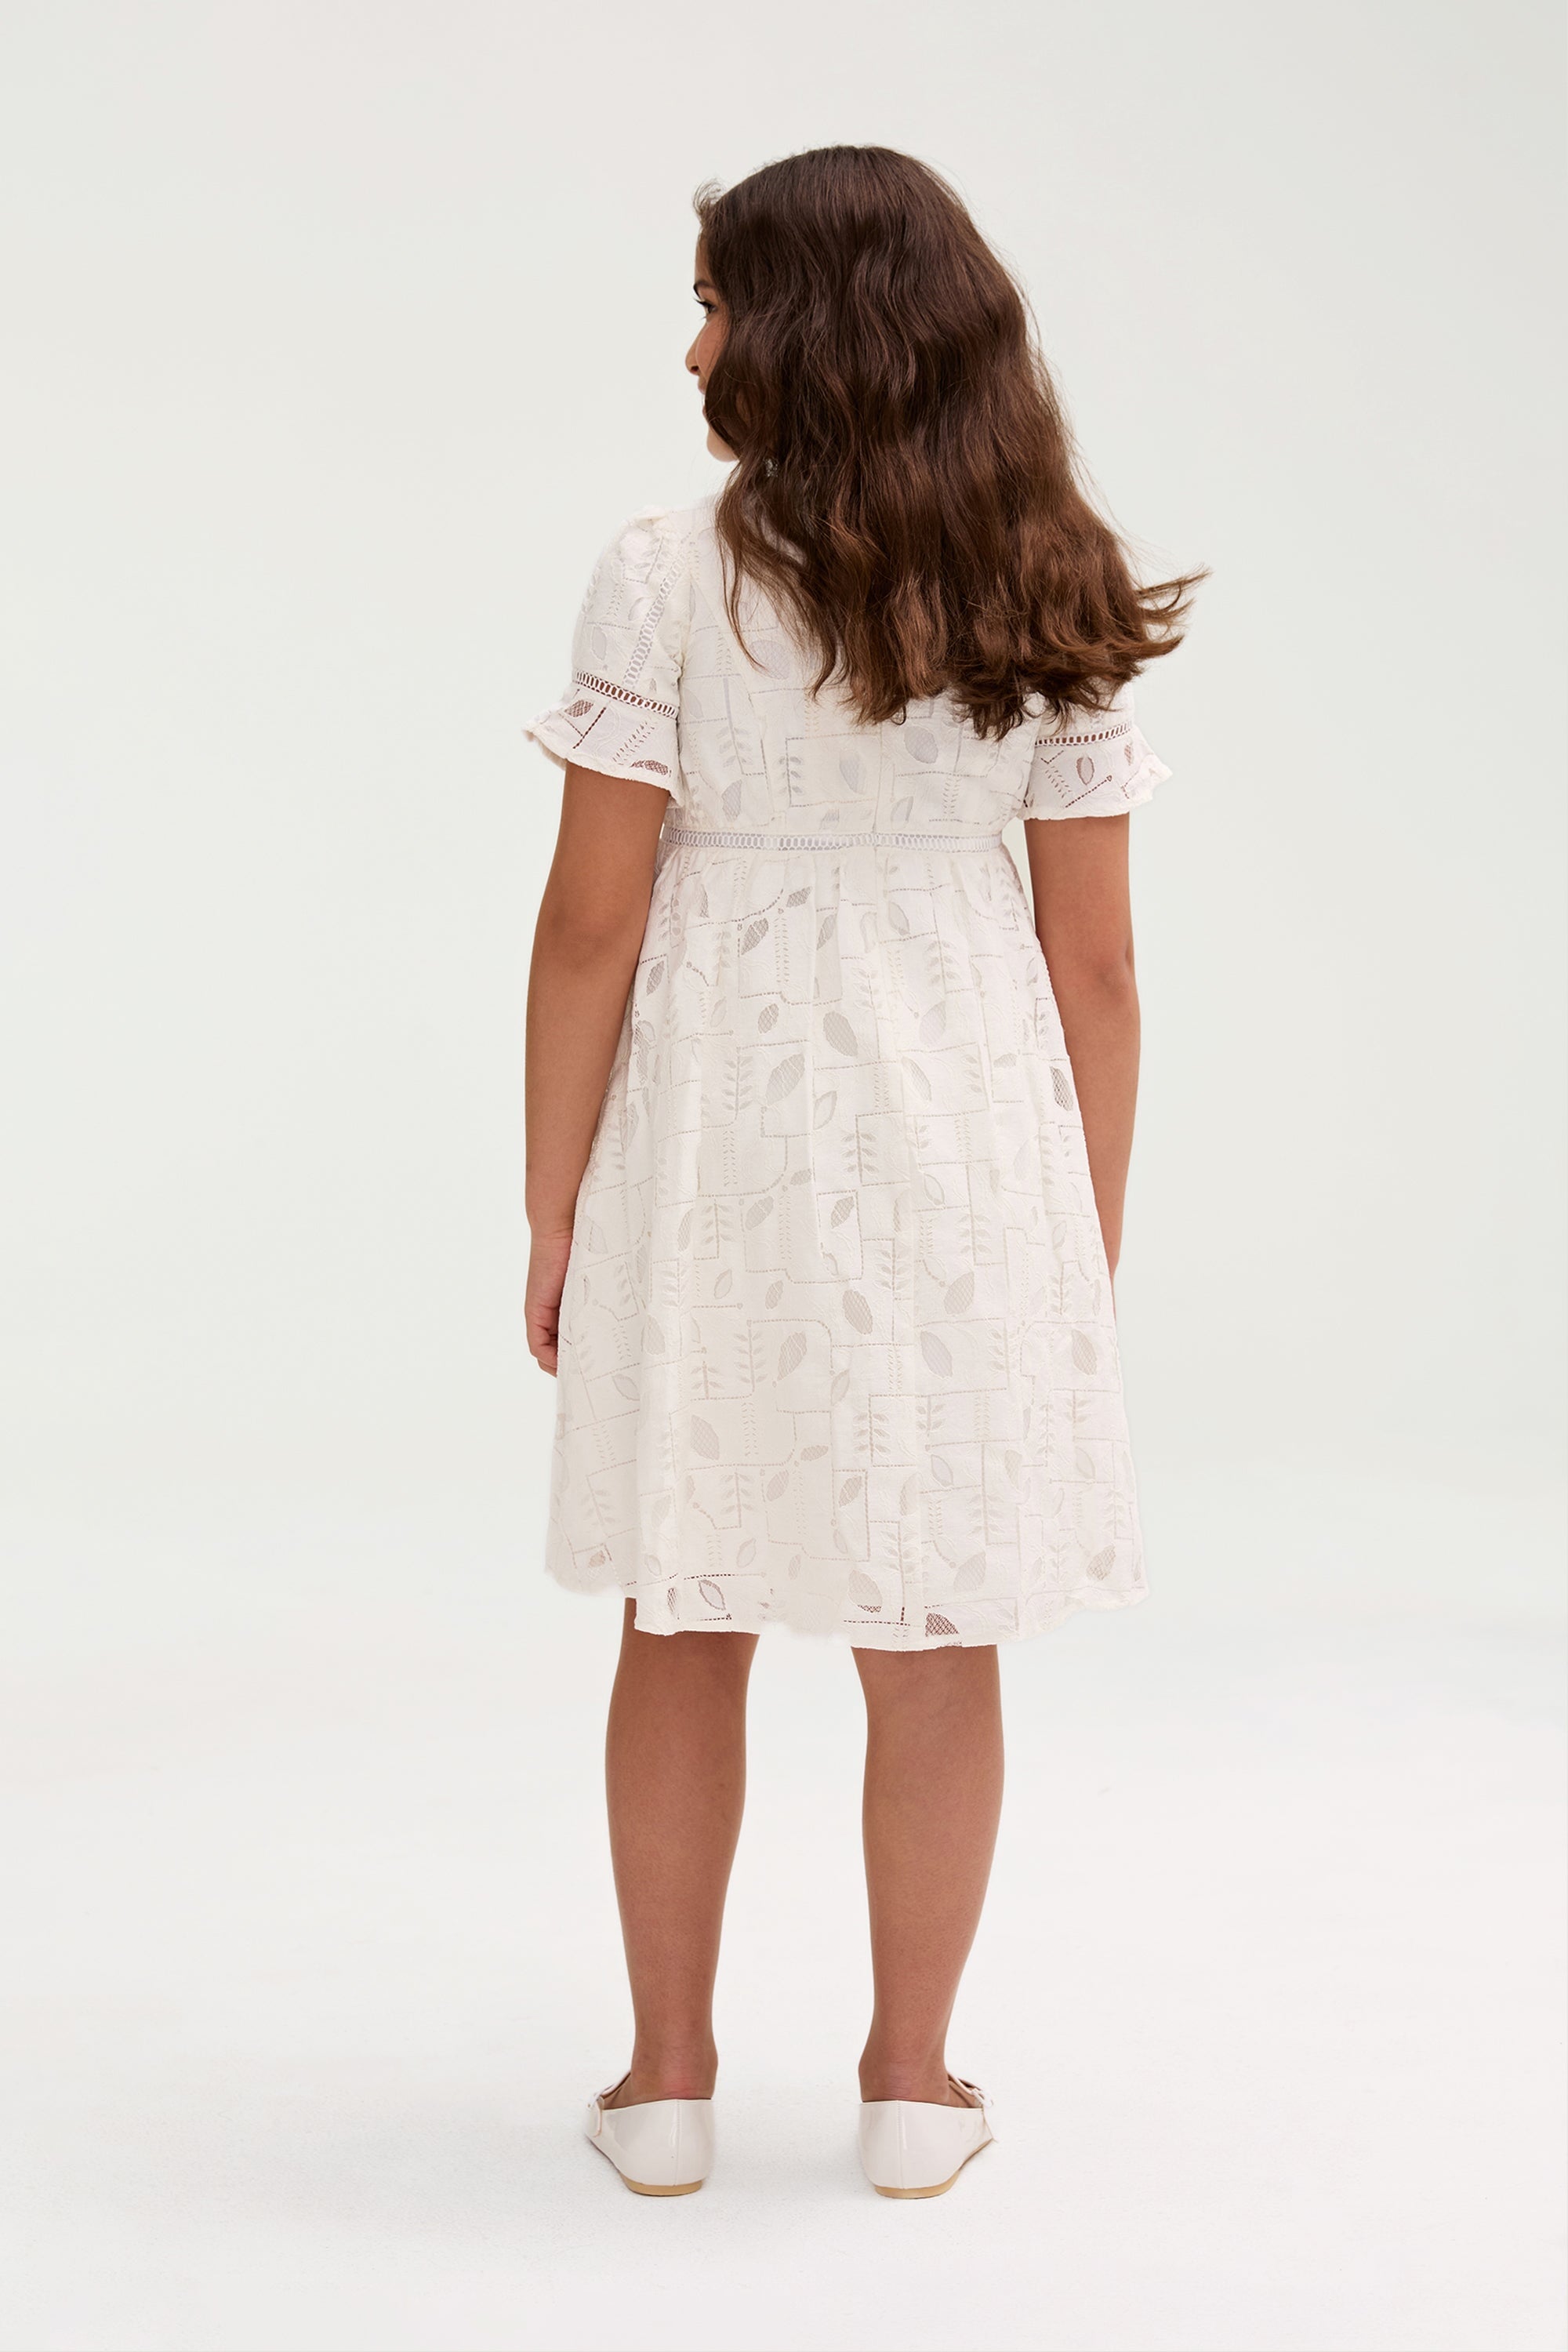 Rayaa White Lace Dress (Girls) Clothing epschoolboard 